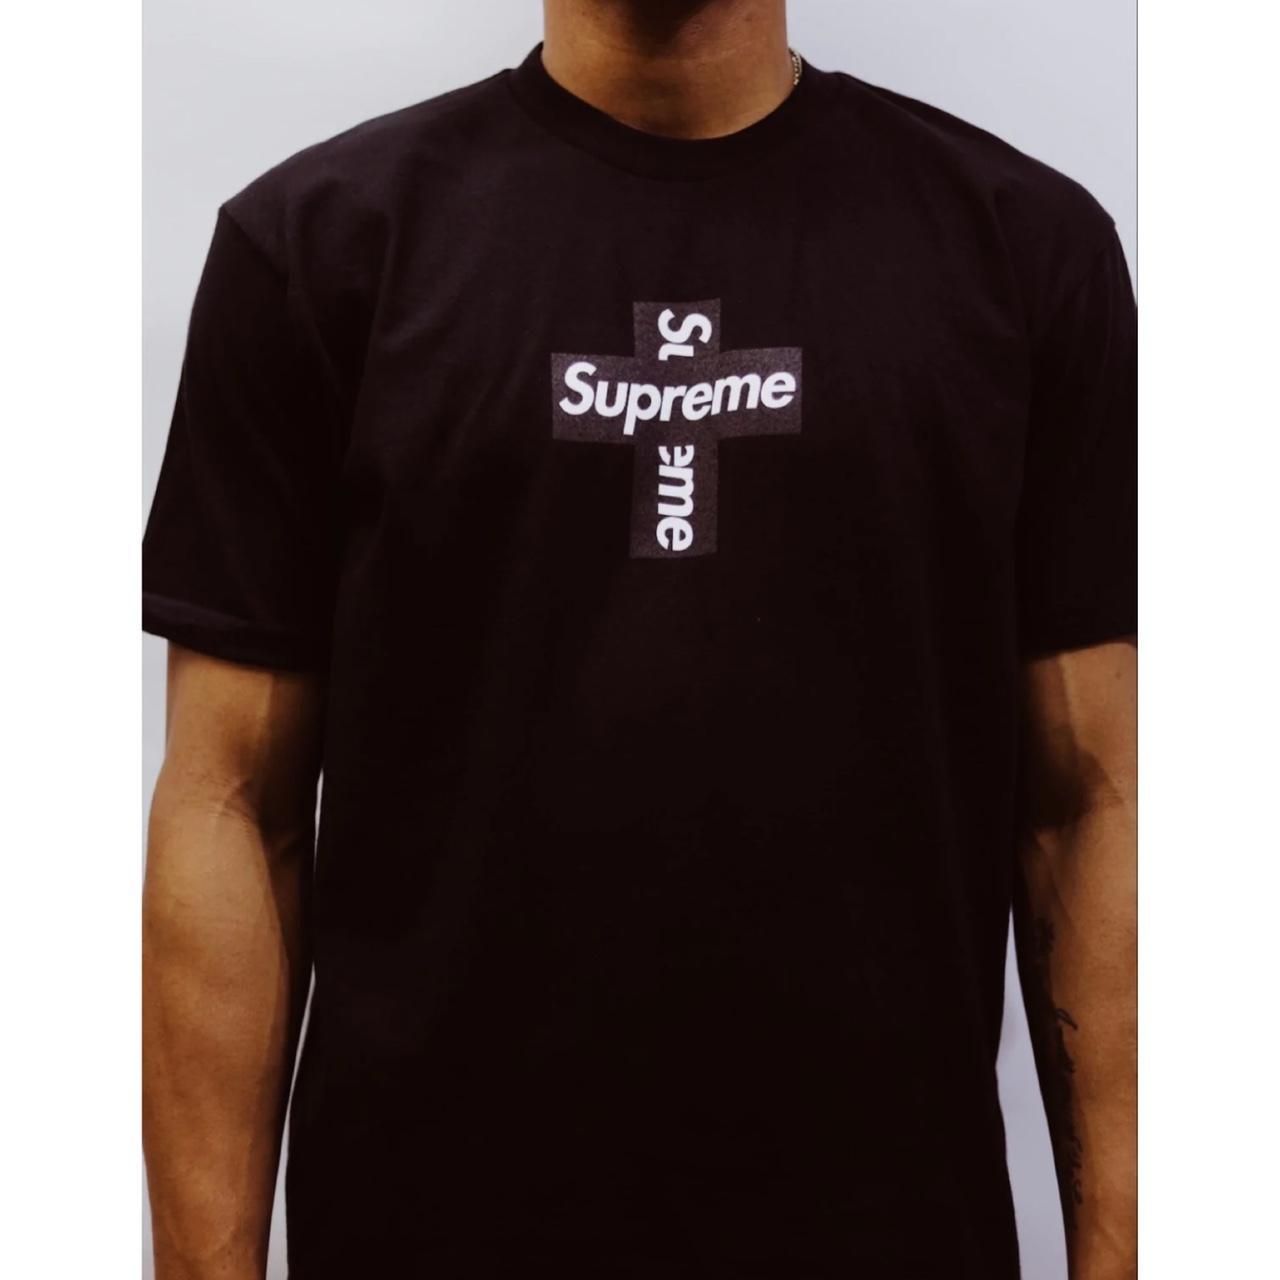 Buy Supreme Cross Box Logo Tee 'Black' - FW20T25 BLACK